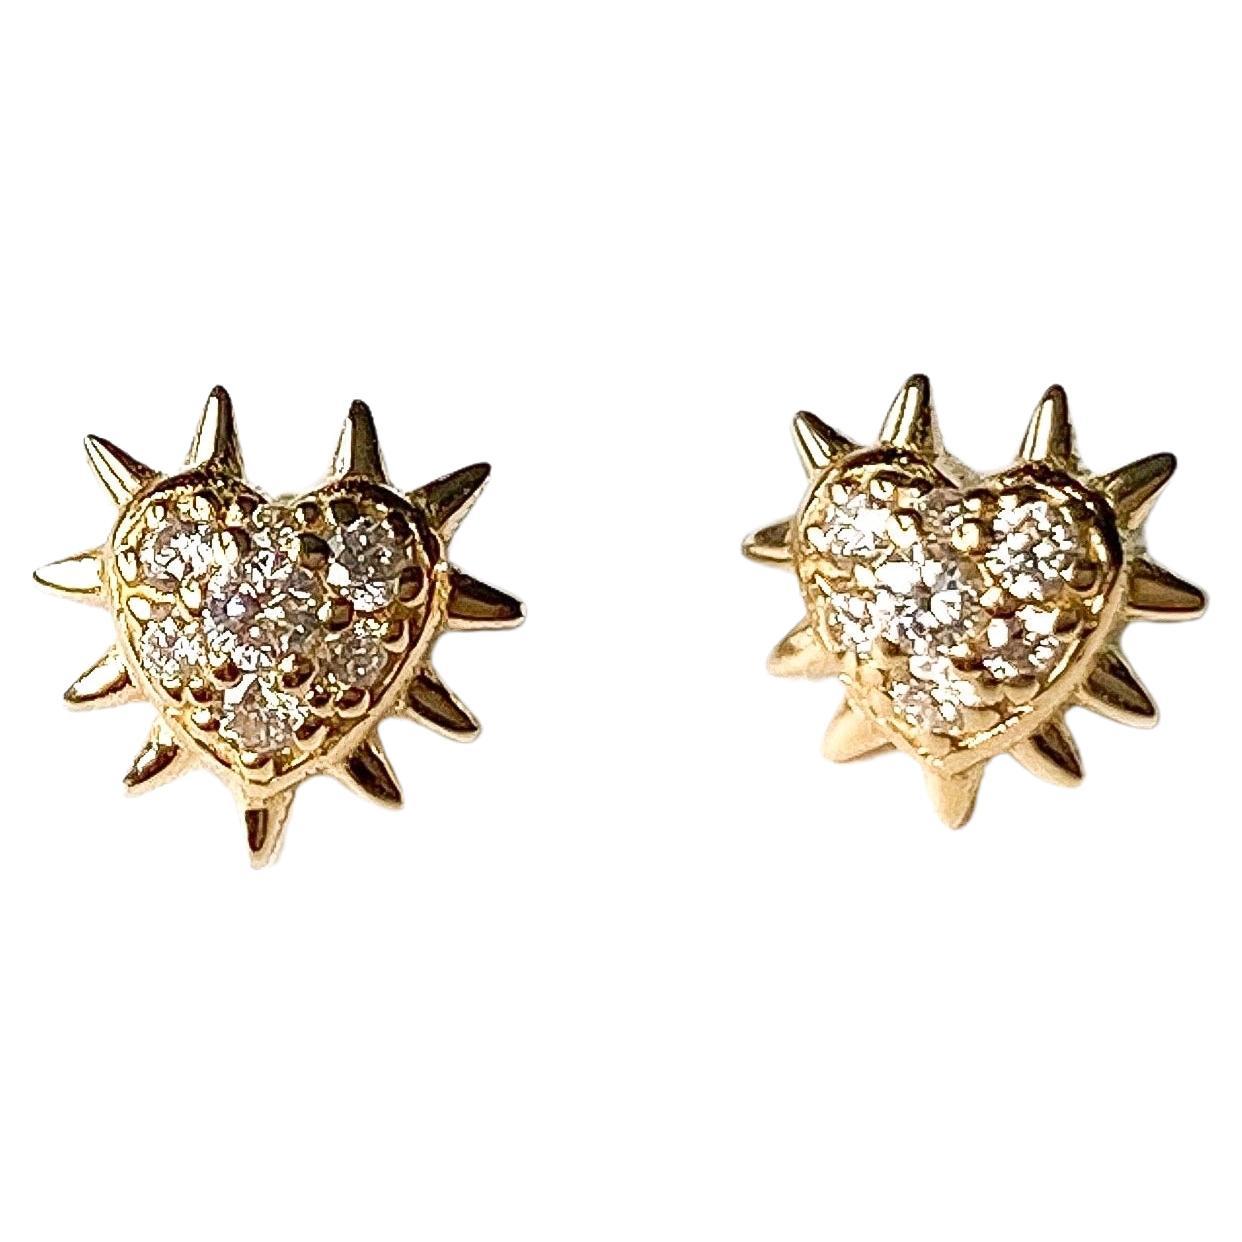 Maria Kotsoni Contemporary 18k Gold Thorny Heart Sculptural Diamond Ear Studs